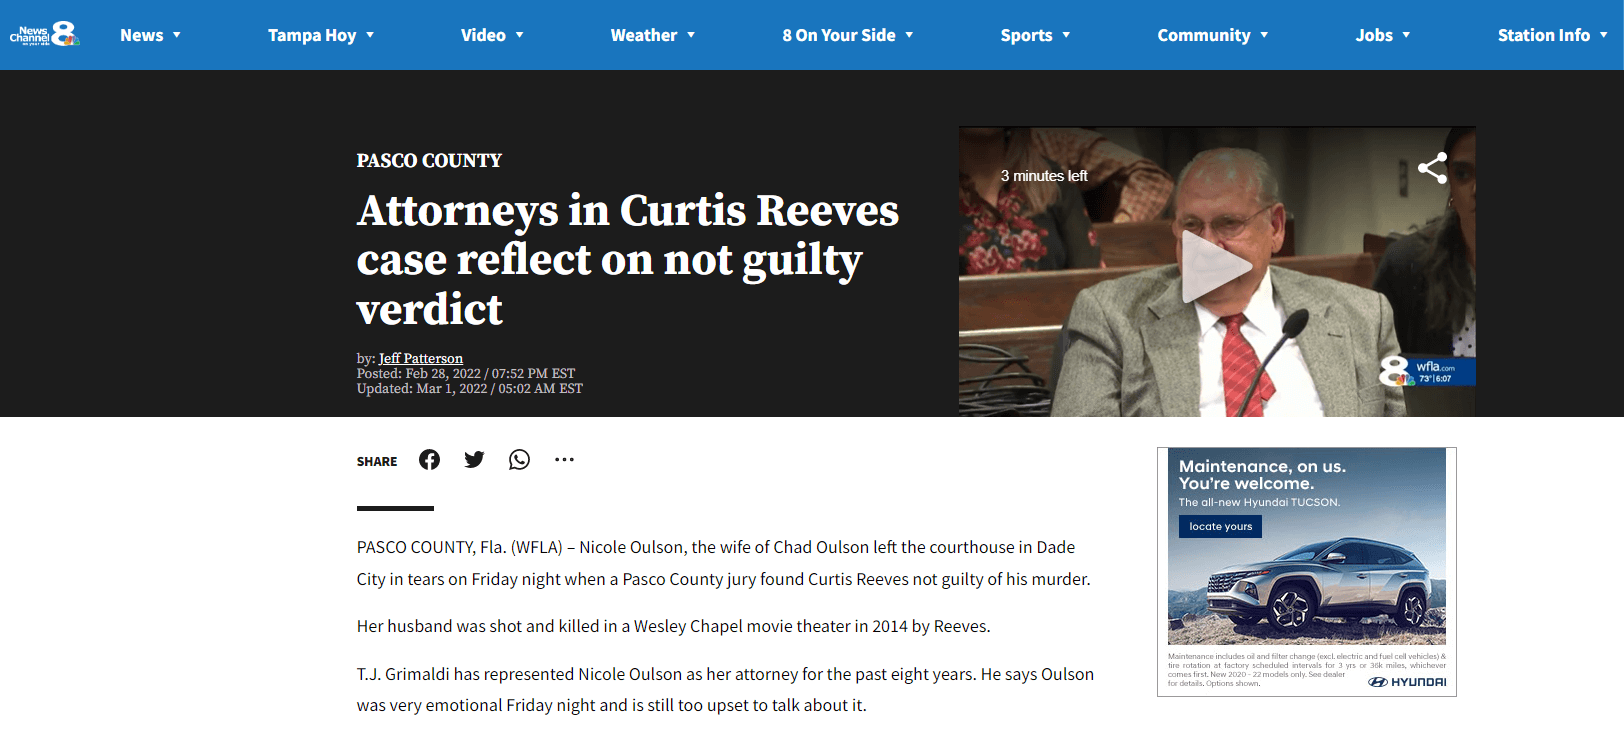 Snapshot of Curtis Reeves trial